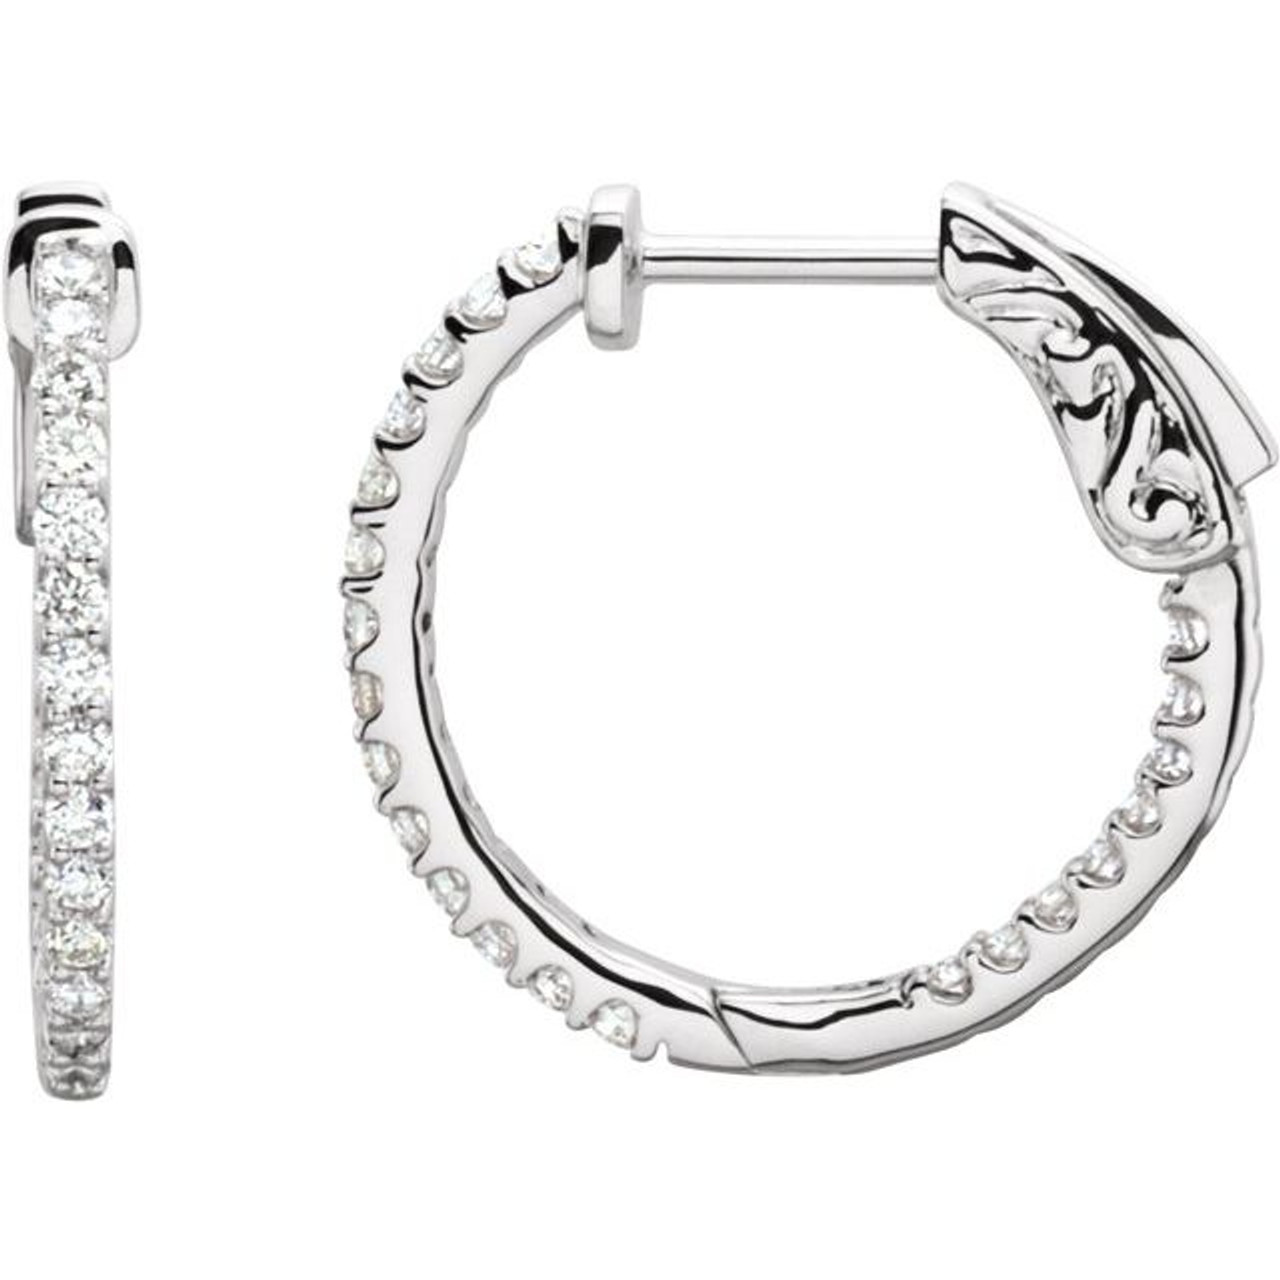 Unique X-Large Diamond Hoop Earrings